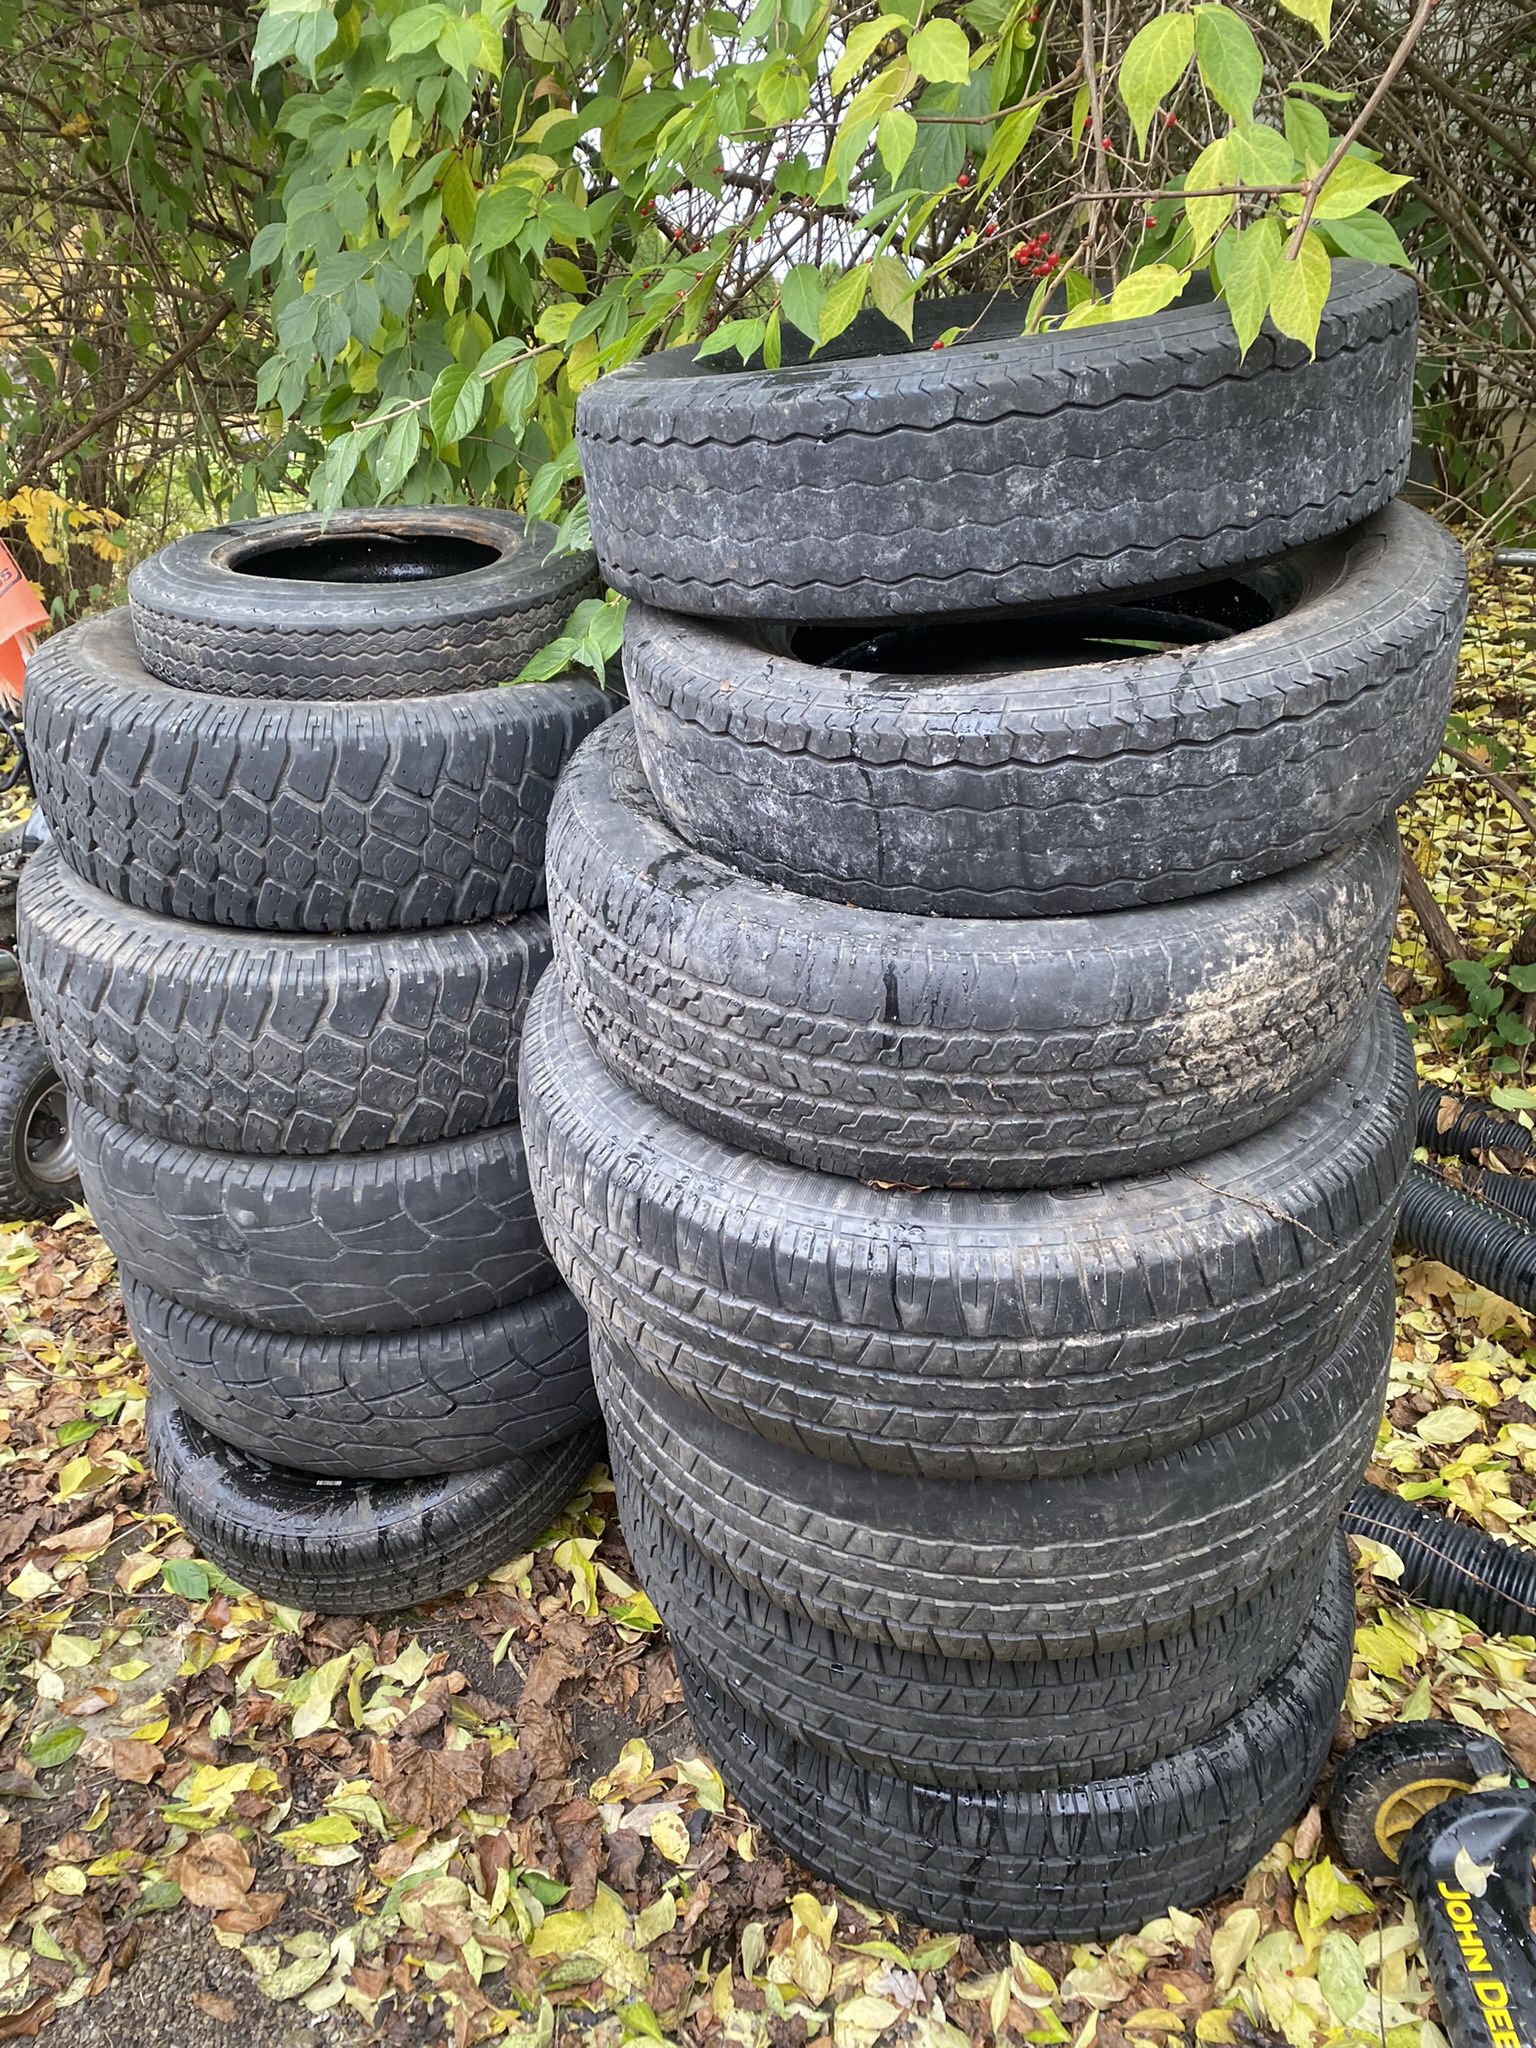 Free Tires